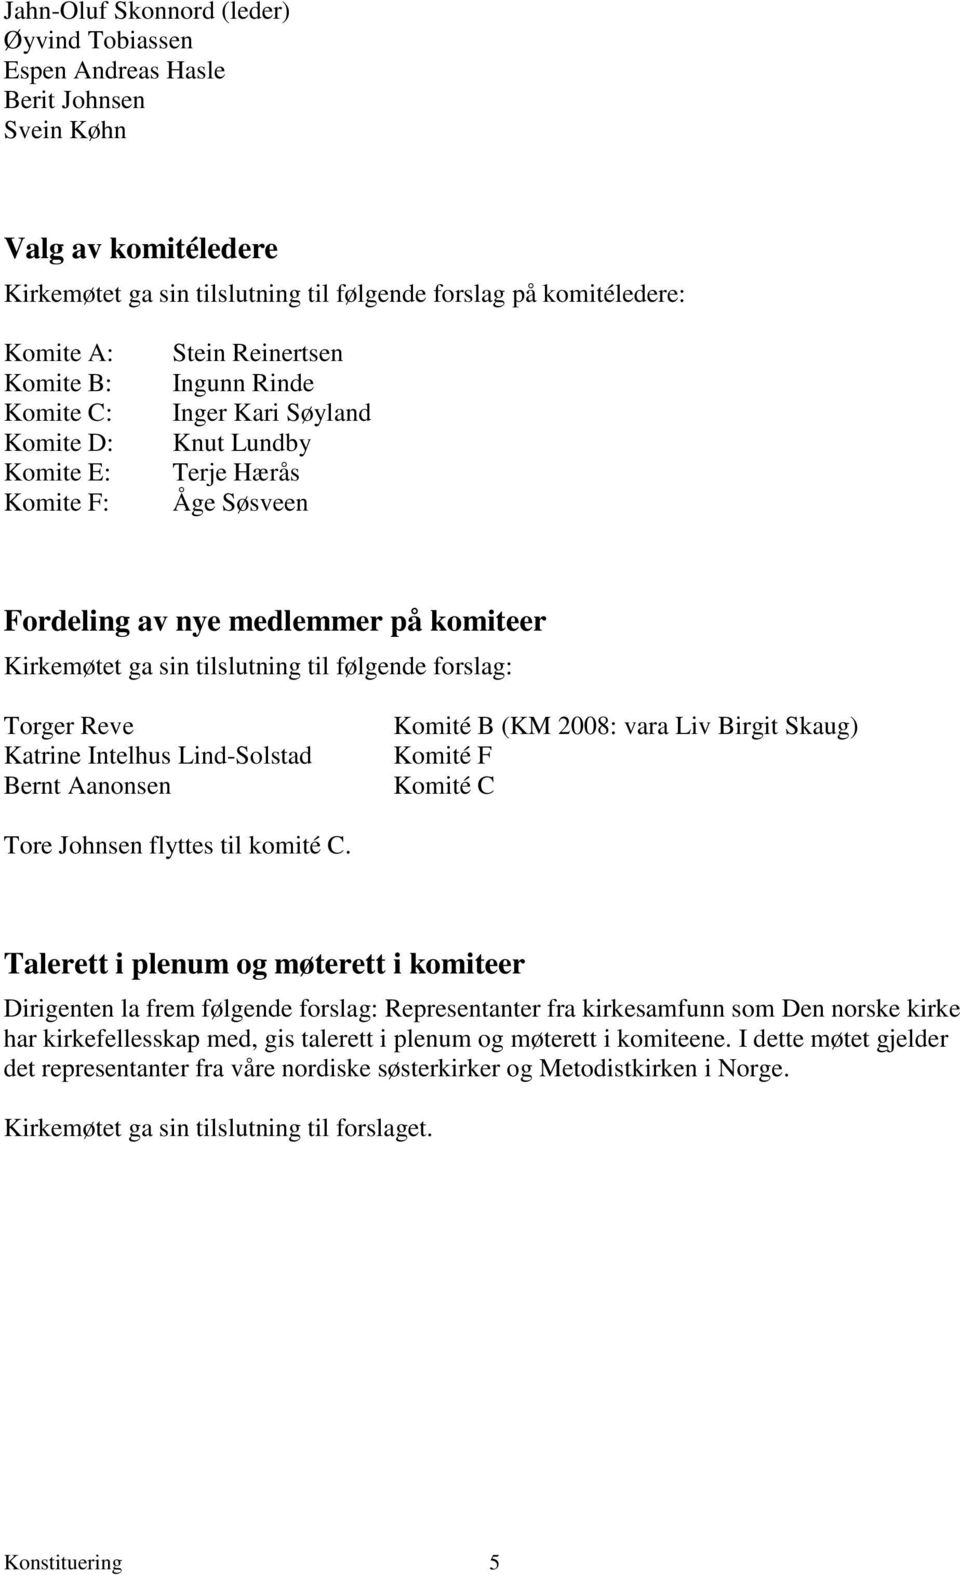 følgende forslag: Torger Reve Katrine Intelhus Lind-Solstad Bernt Aanonsen Komité B (KM 2008: vara Liv Birgit Skaug) Komité F Komité C Tore Johnsen flyttes til komité C.